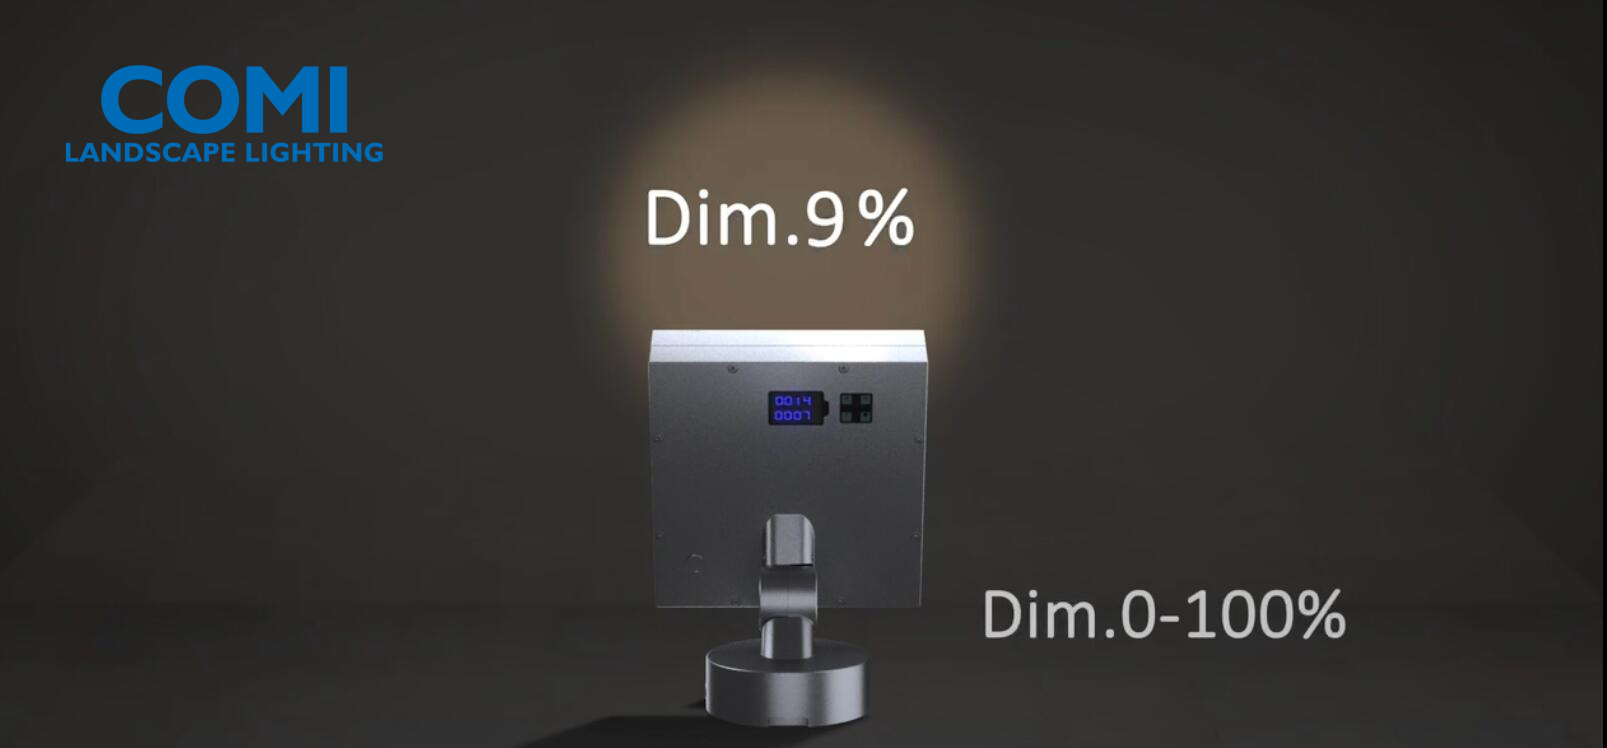 LED flood lights with 0-100% dimming function 0-10V or DALI or DMX support